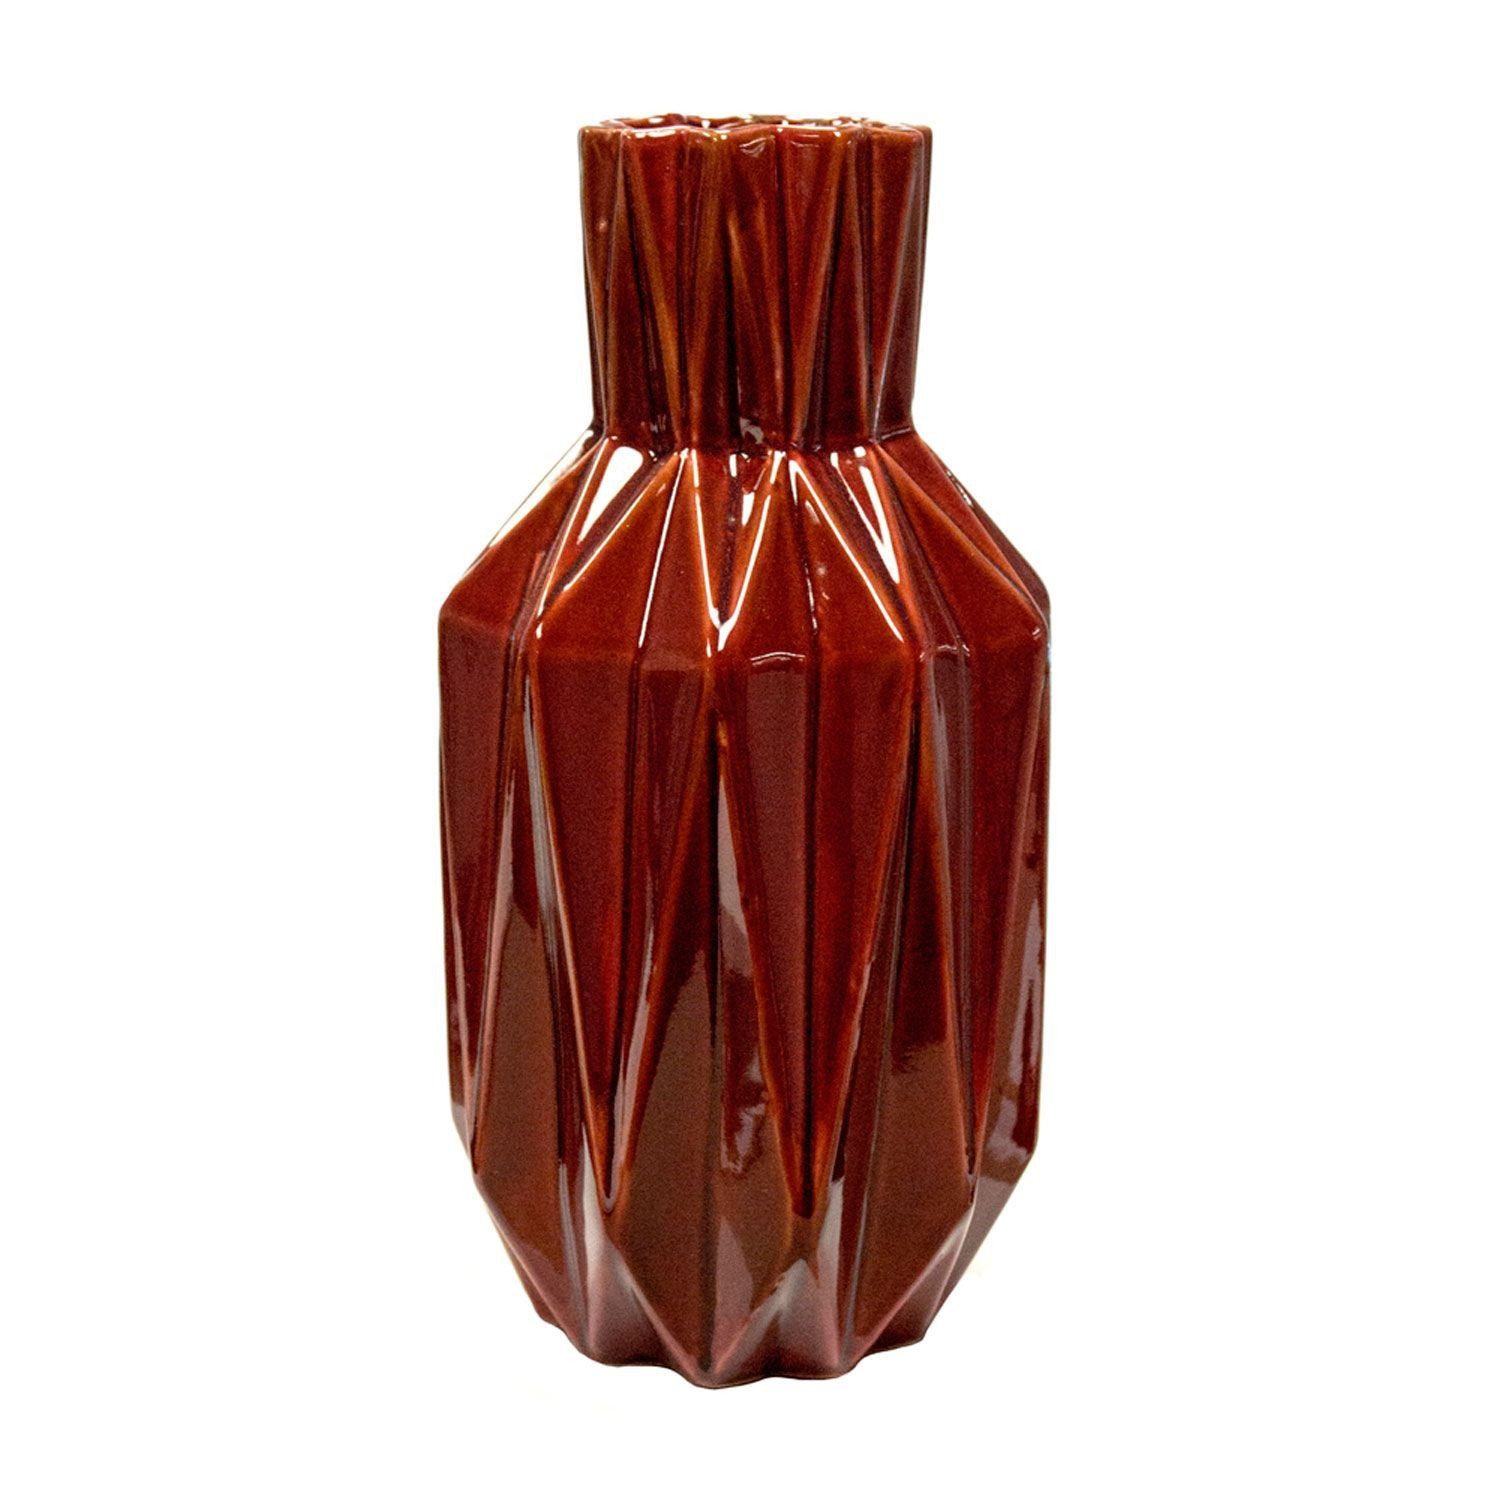 patina floor vase of 36 tall red floor vase the weekly world regarding 36 tall red floor vase